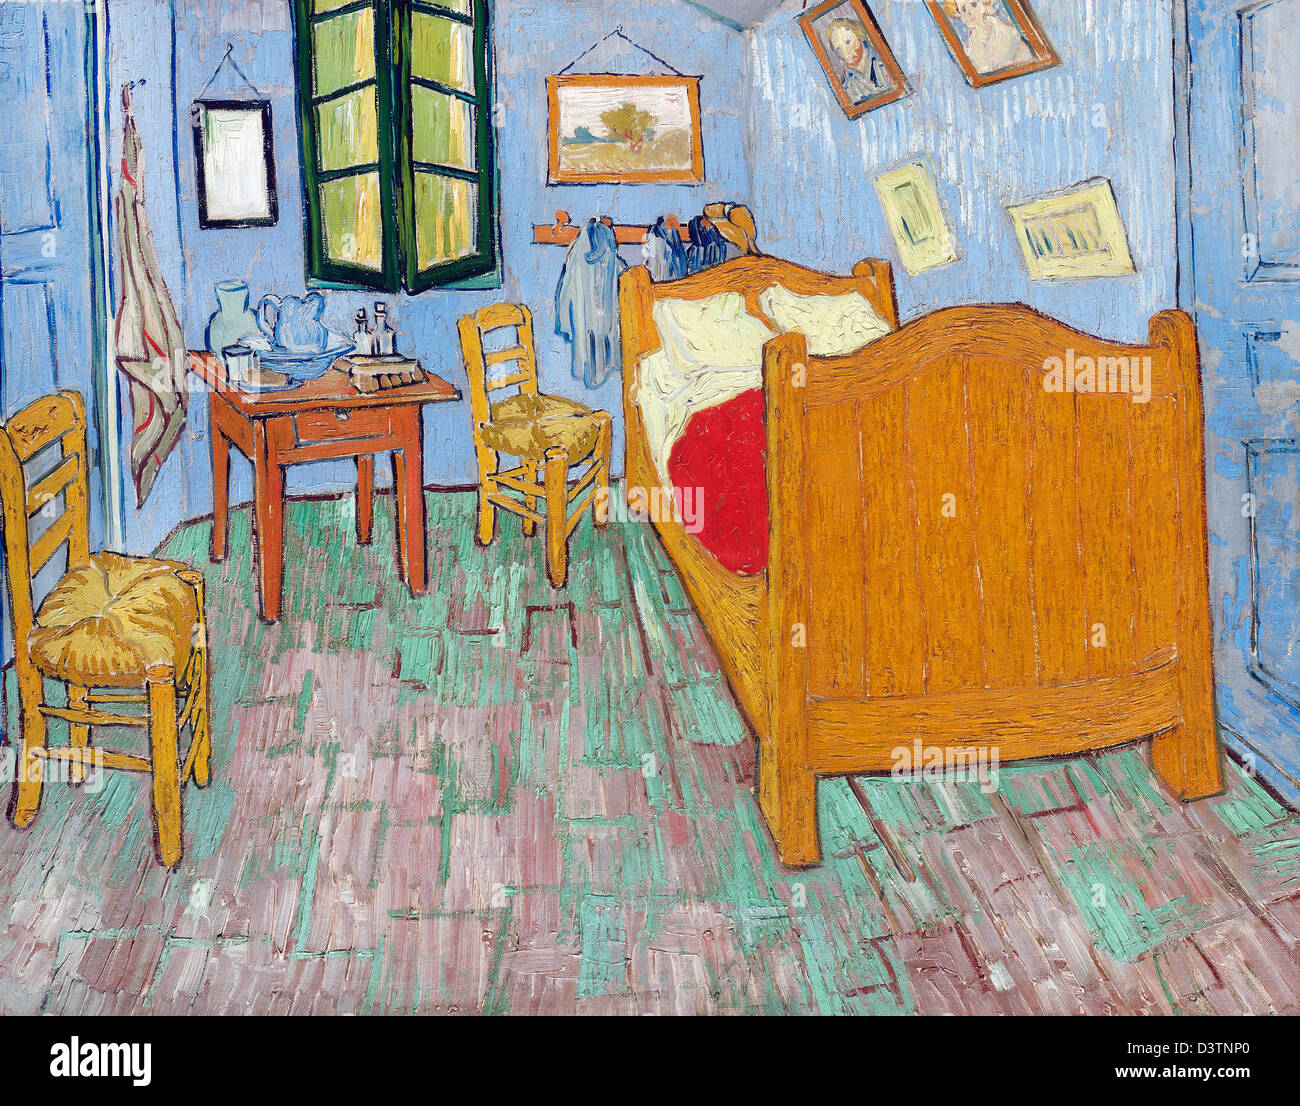 Vincent Van Gogh The Bedroom 1889 Oil On Canvas Art